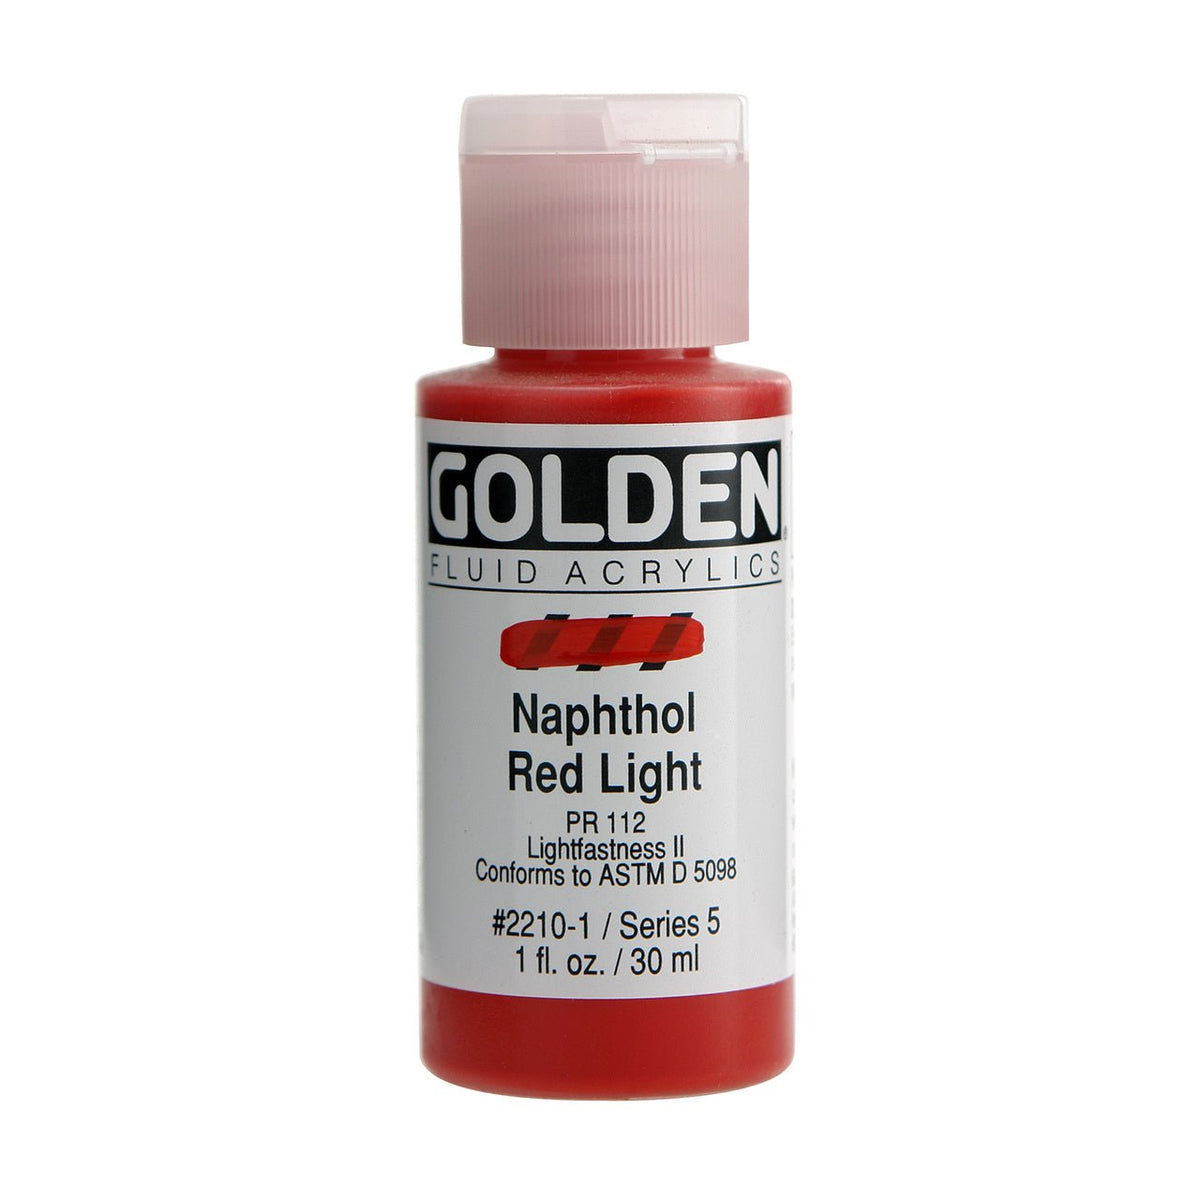 Golden Fluid Acrylic Naphthol Red Light 1 oz - merriartist.com